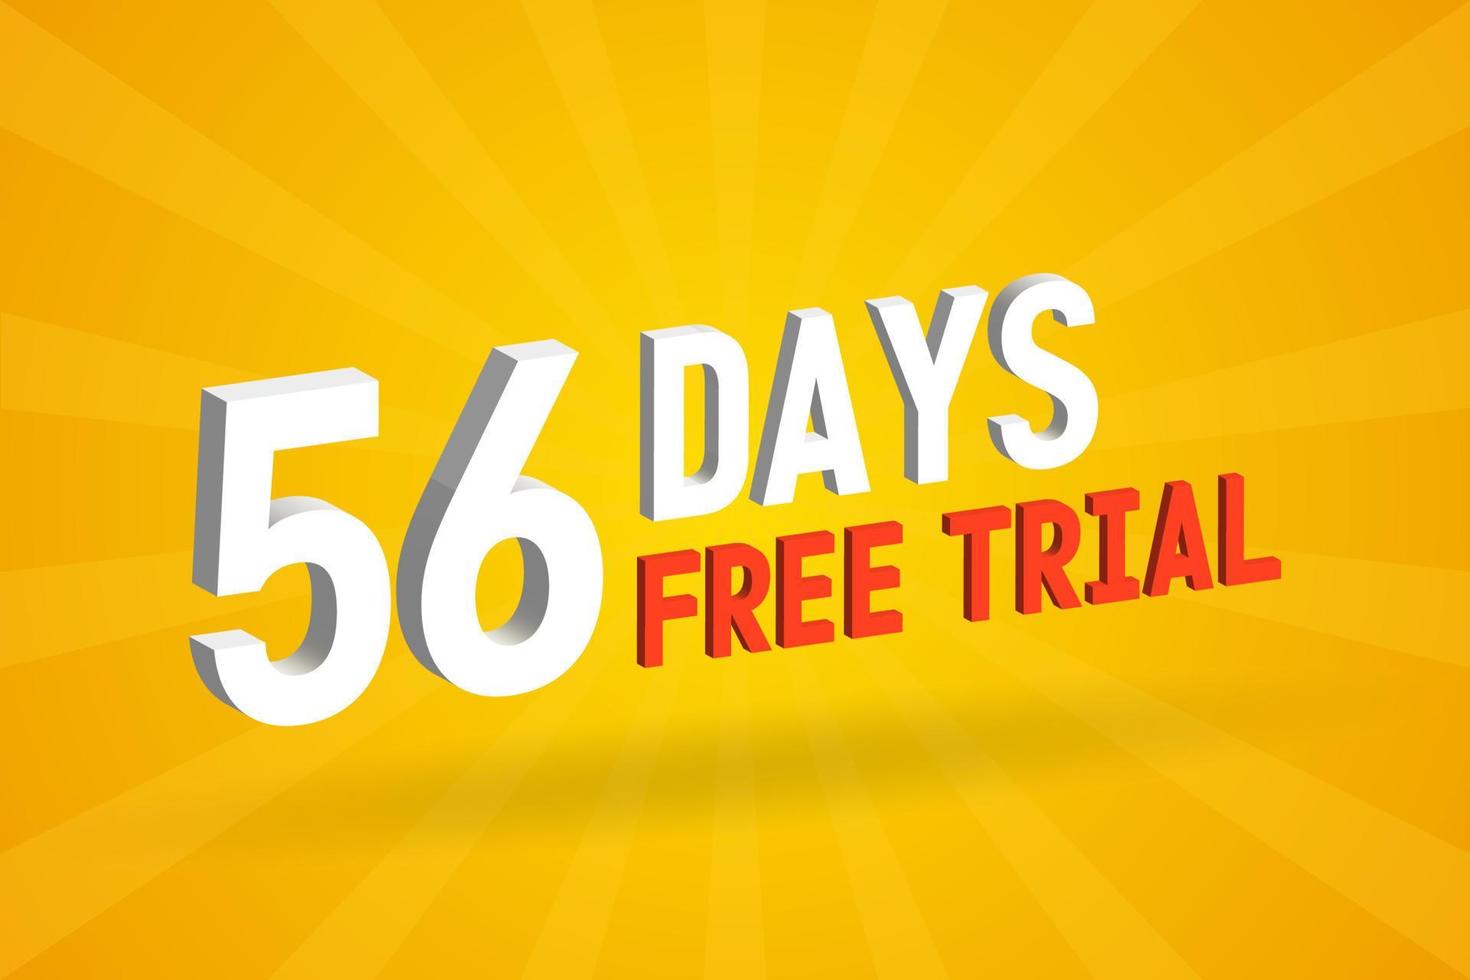 oferta gratuita 56 días de prueba gratuita texto 3d stock vector